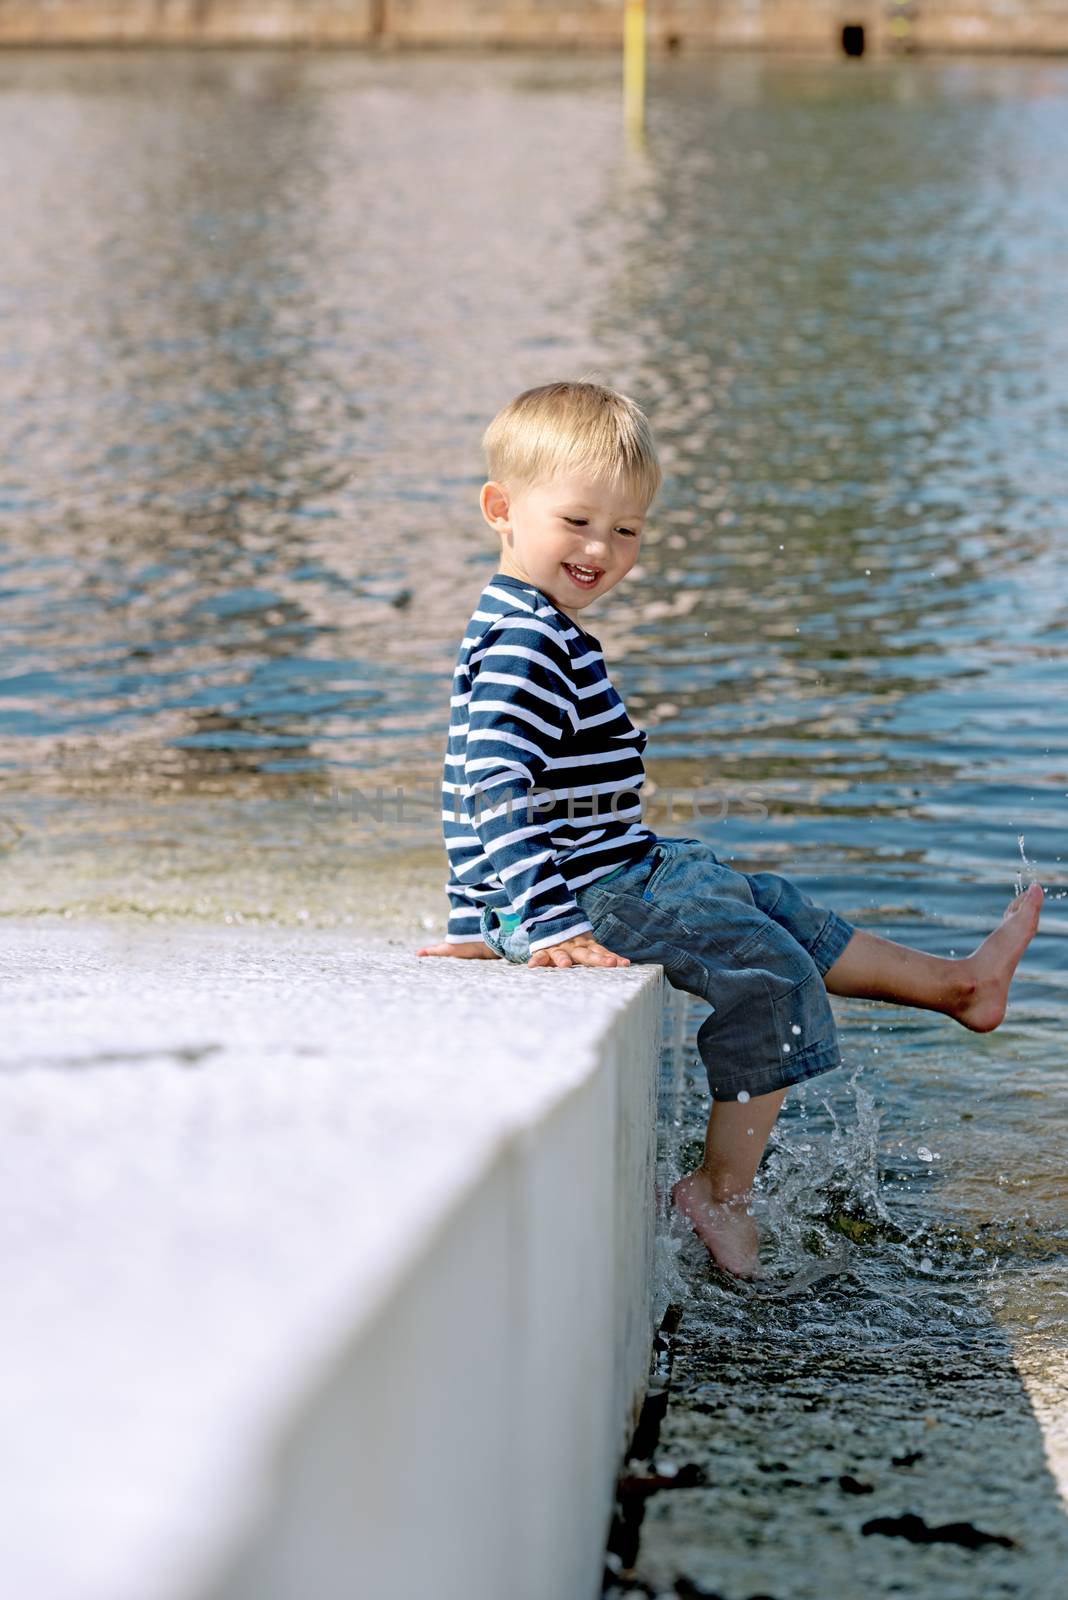 Little preschool boy playing outdoors near water by Nanisimova